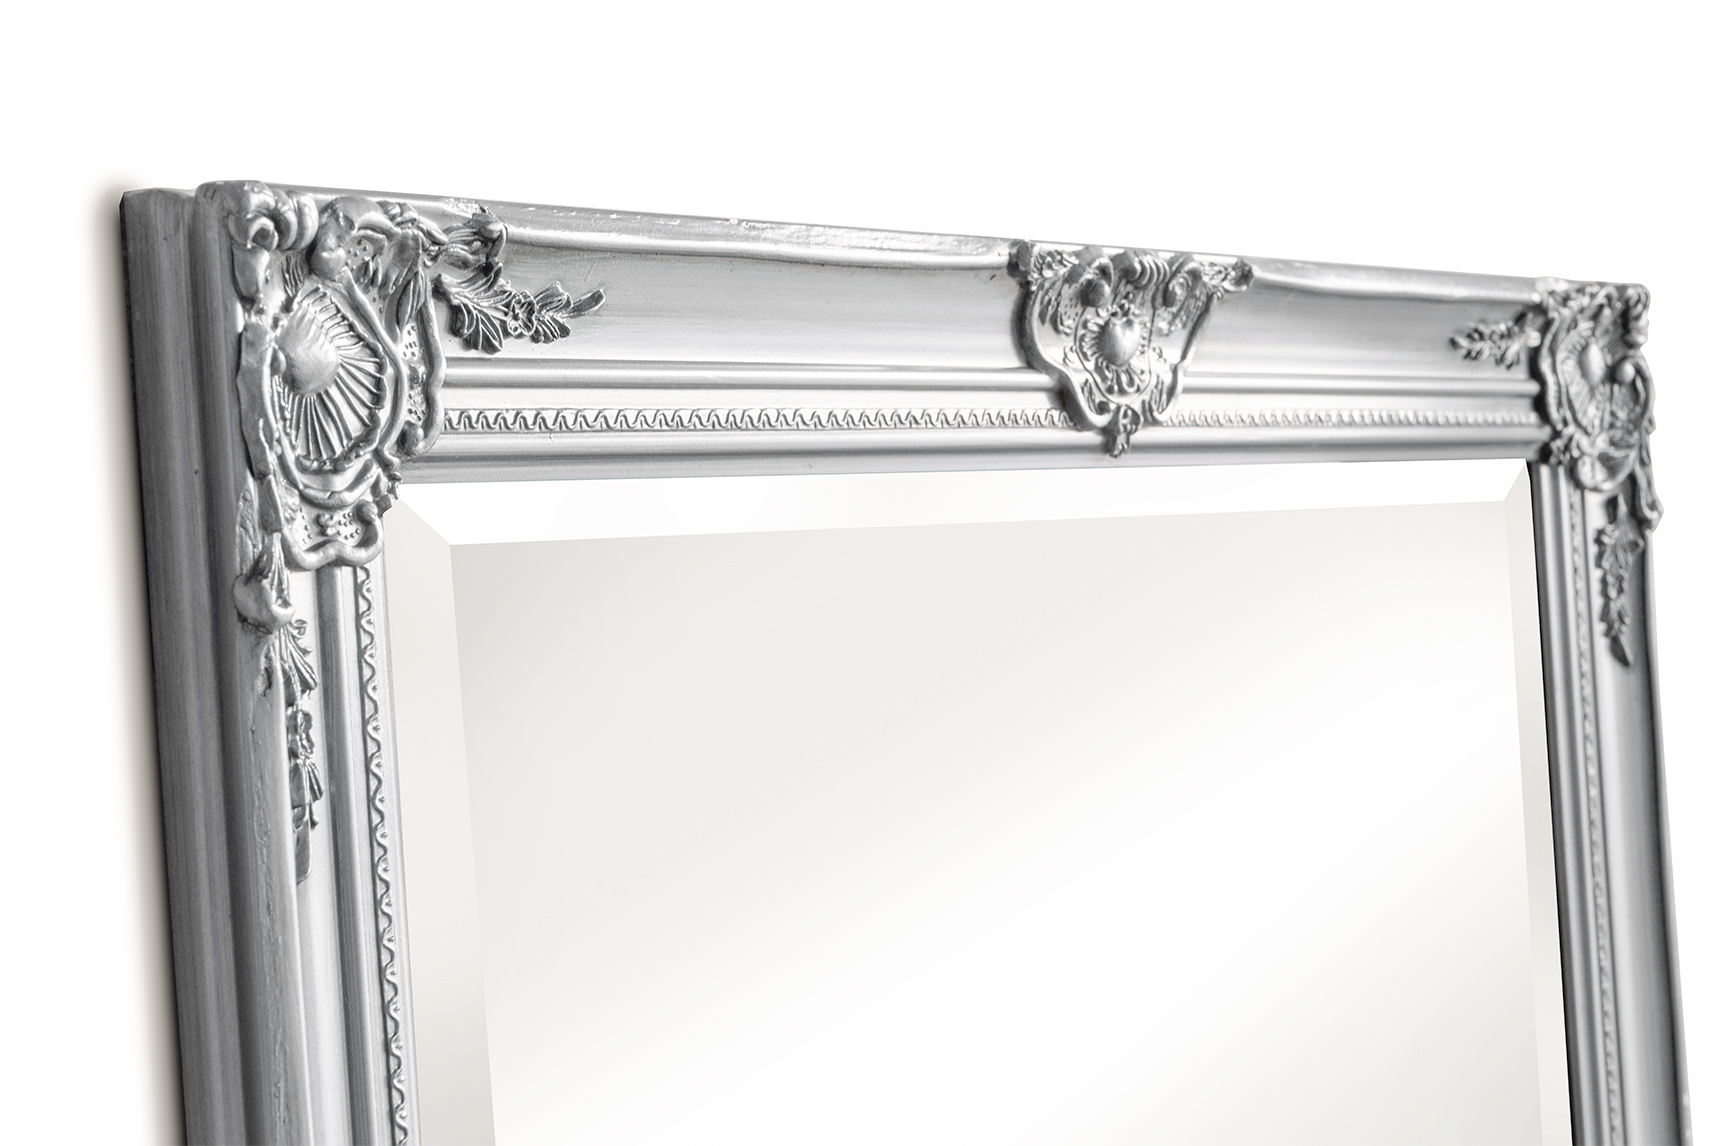 LC Home Wandspiegel Barock Spiegel Silber ca. 180x80 cm Antik-Stil Ganzkörperspiegel